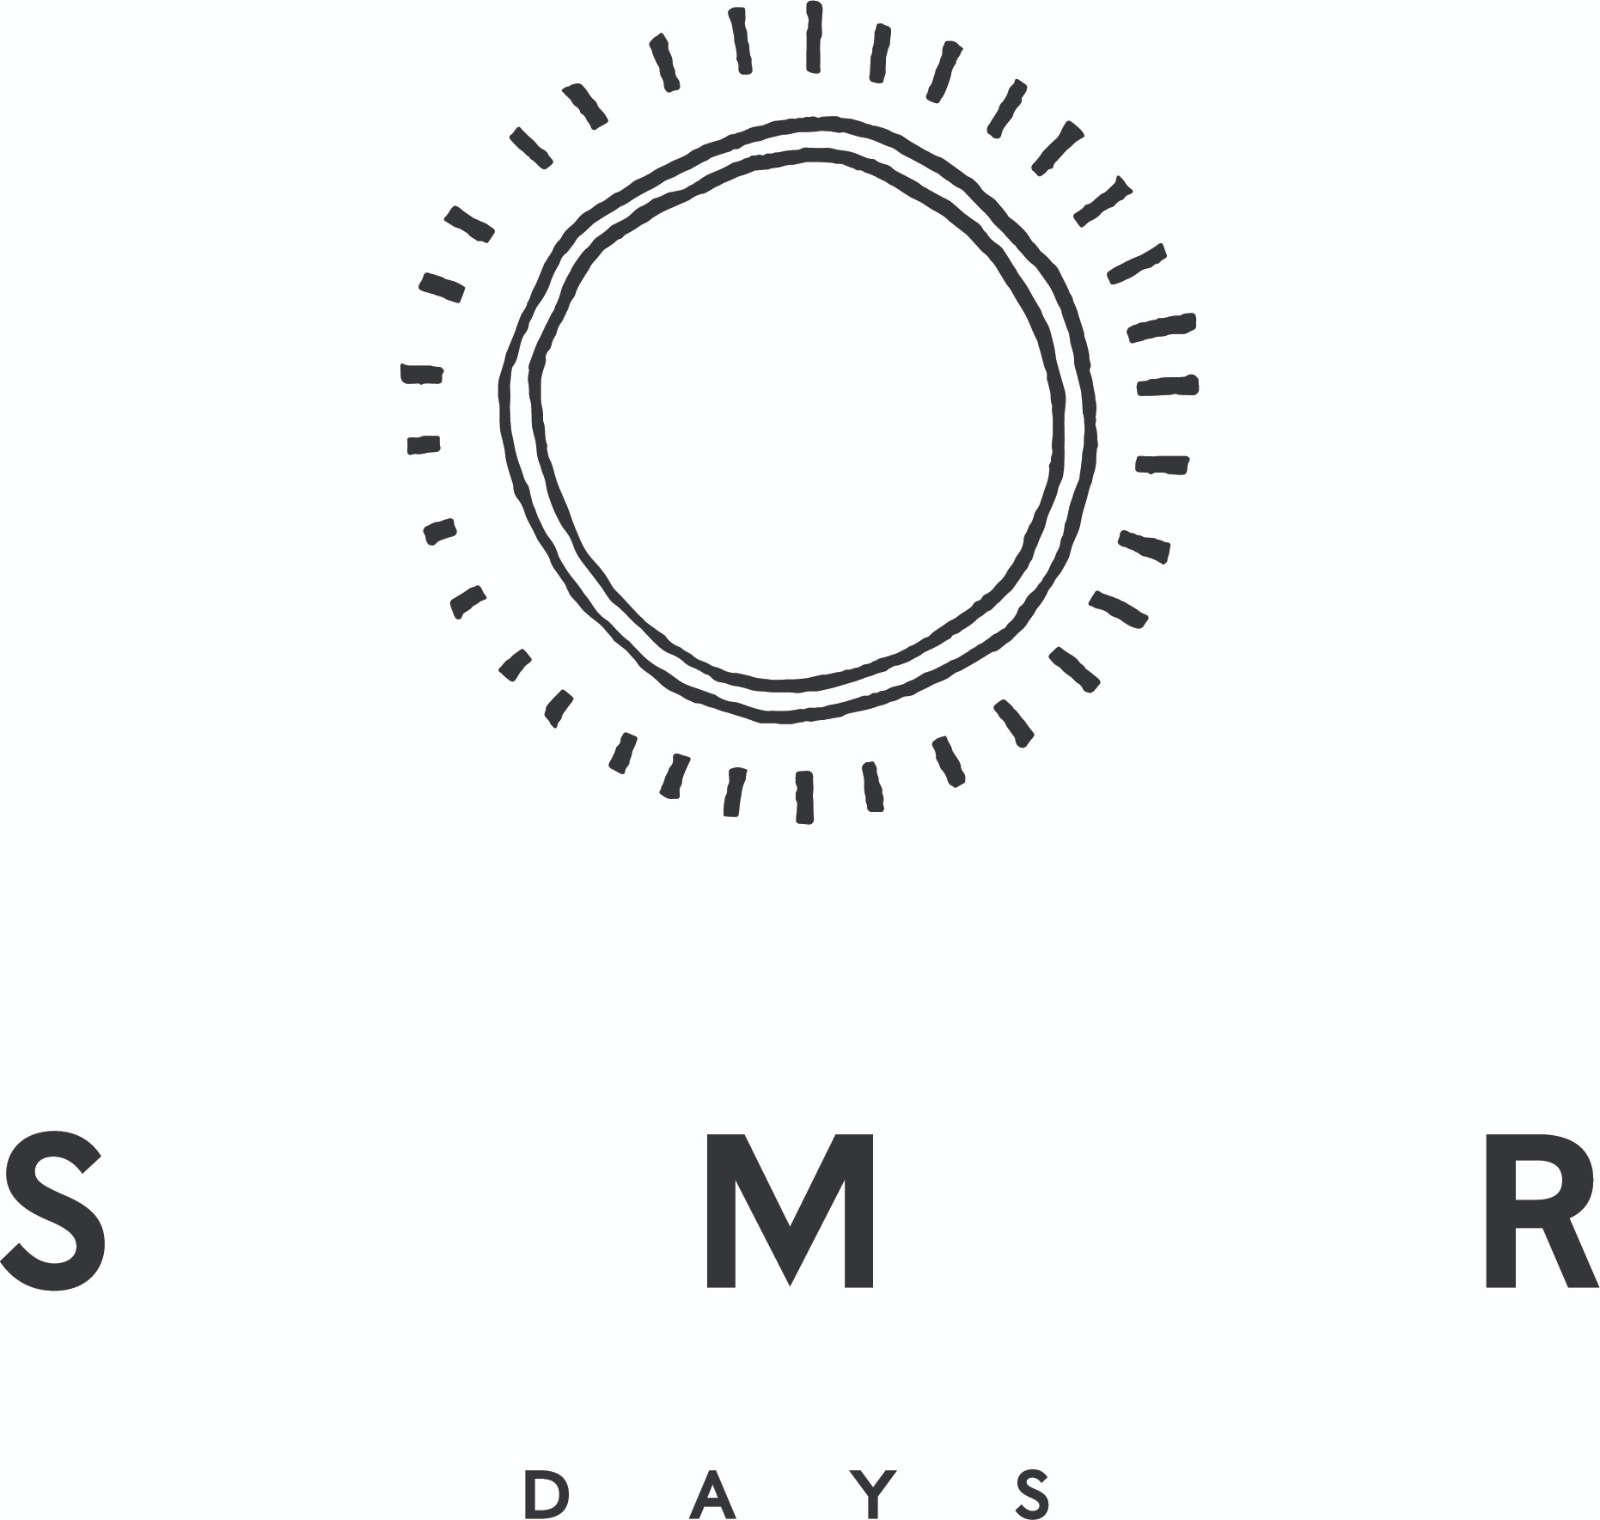 SMR logos